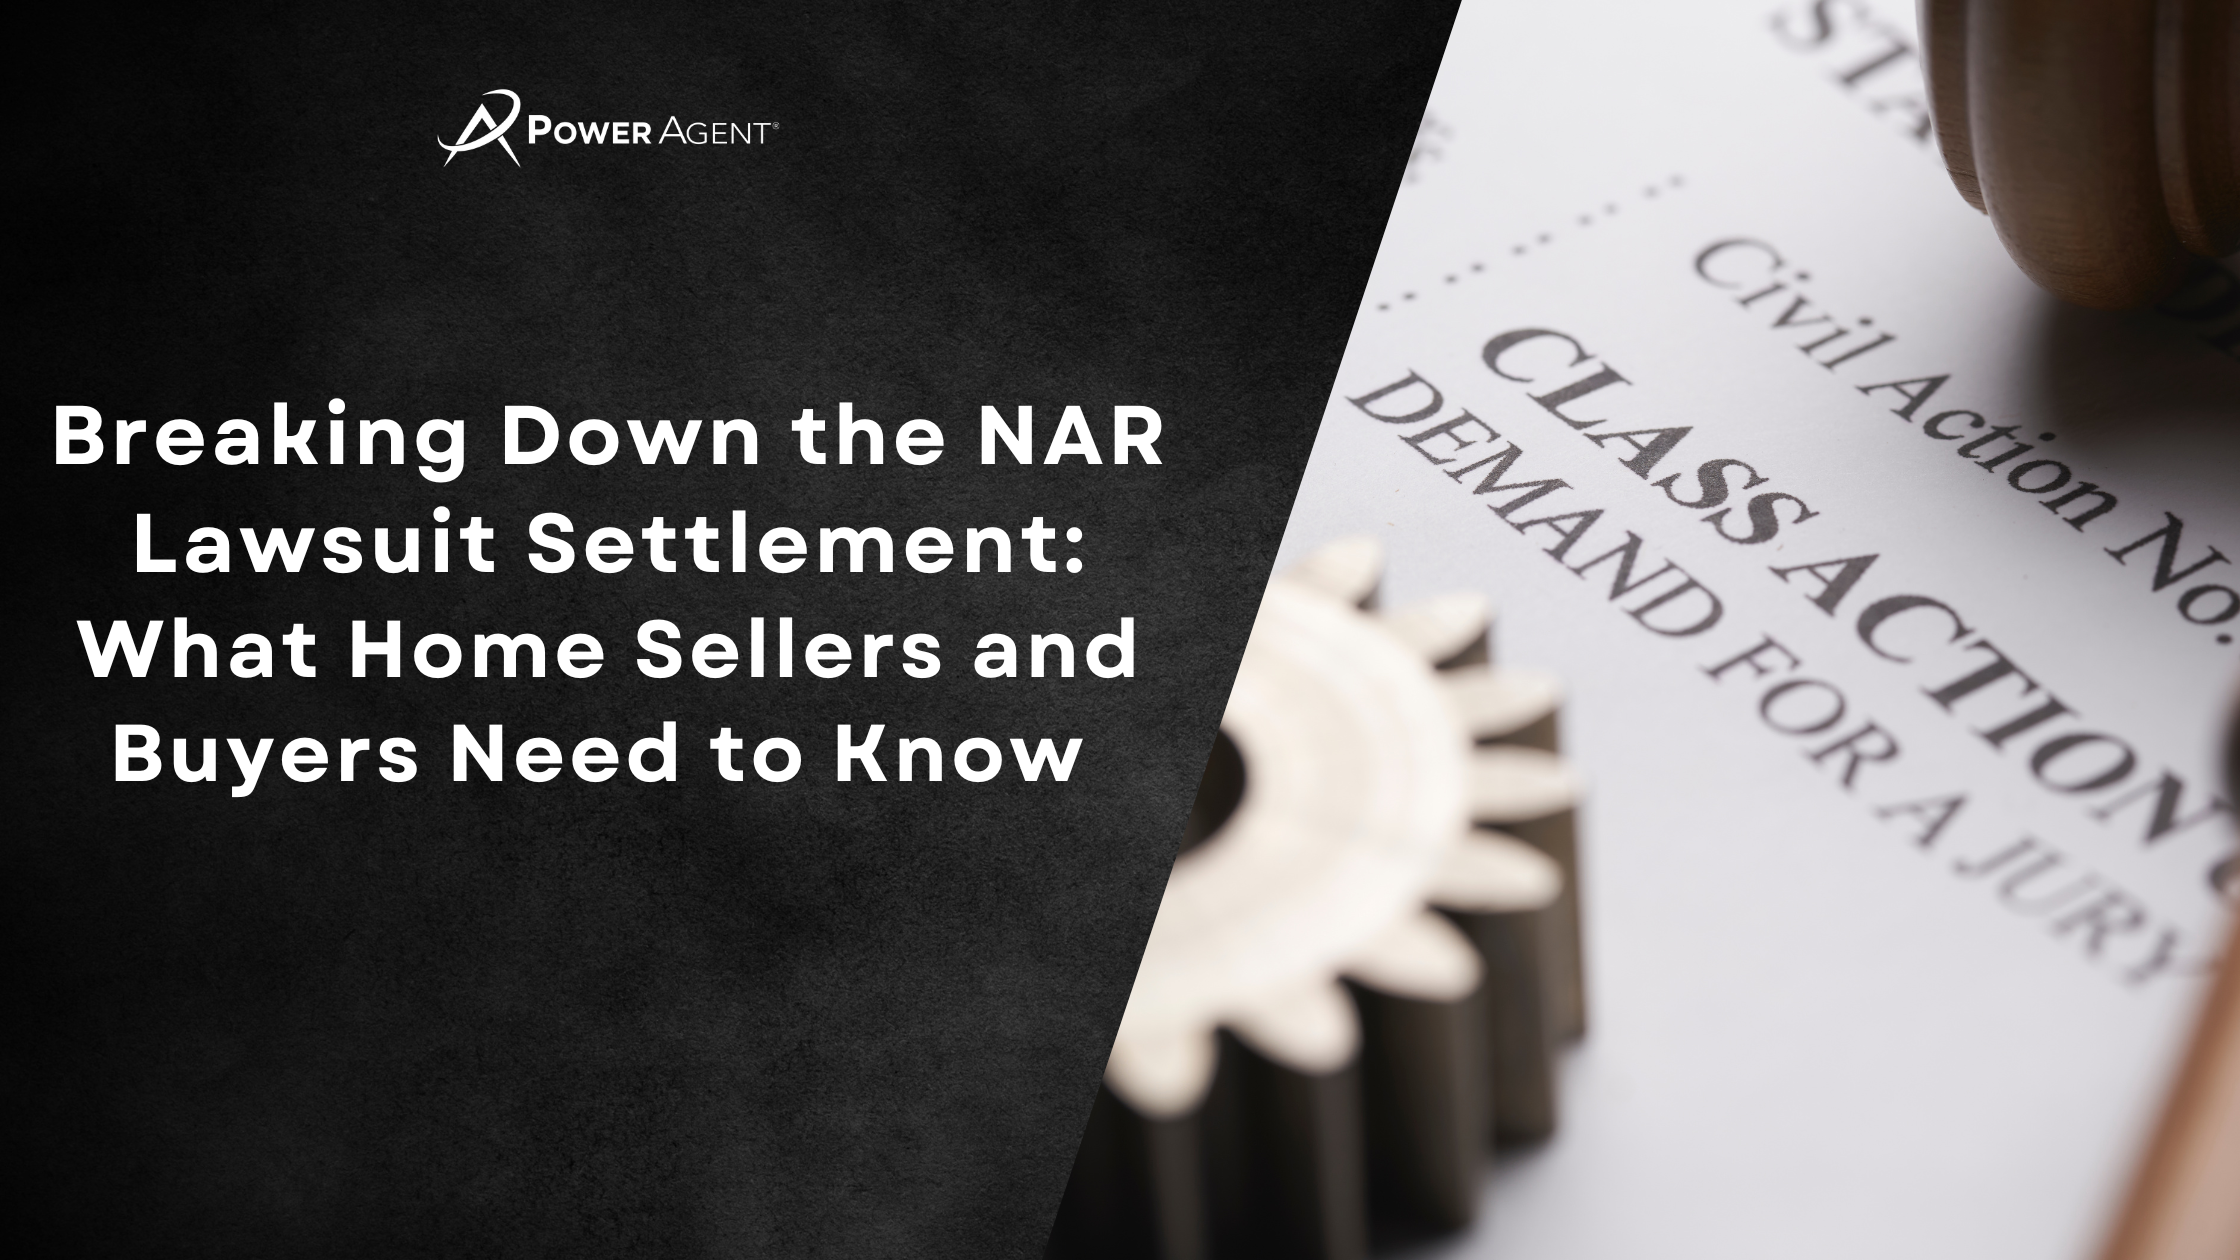 nar lawsuit breakdown for buyers and sellers